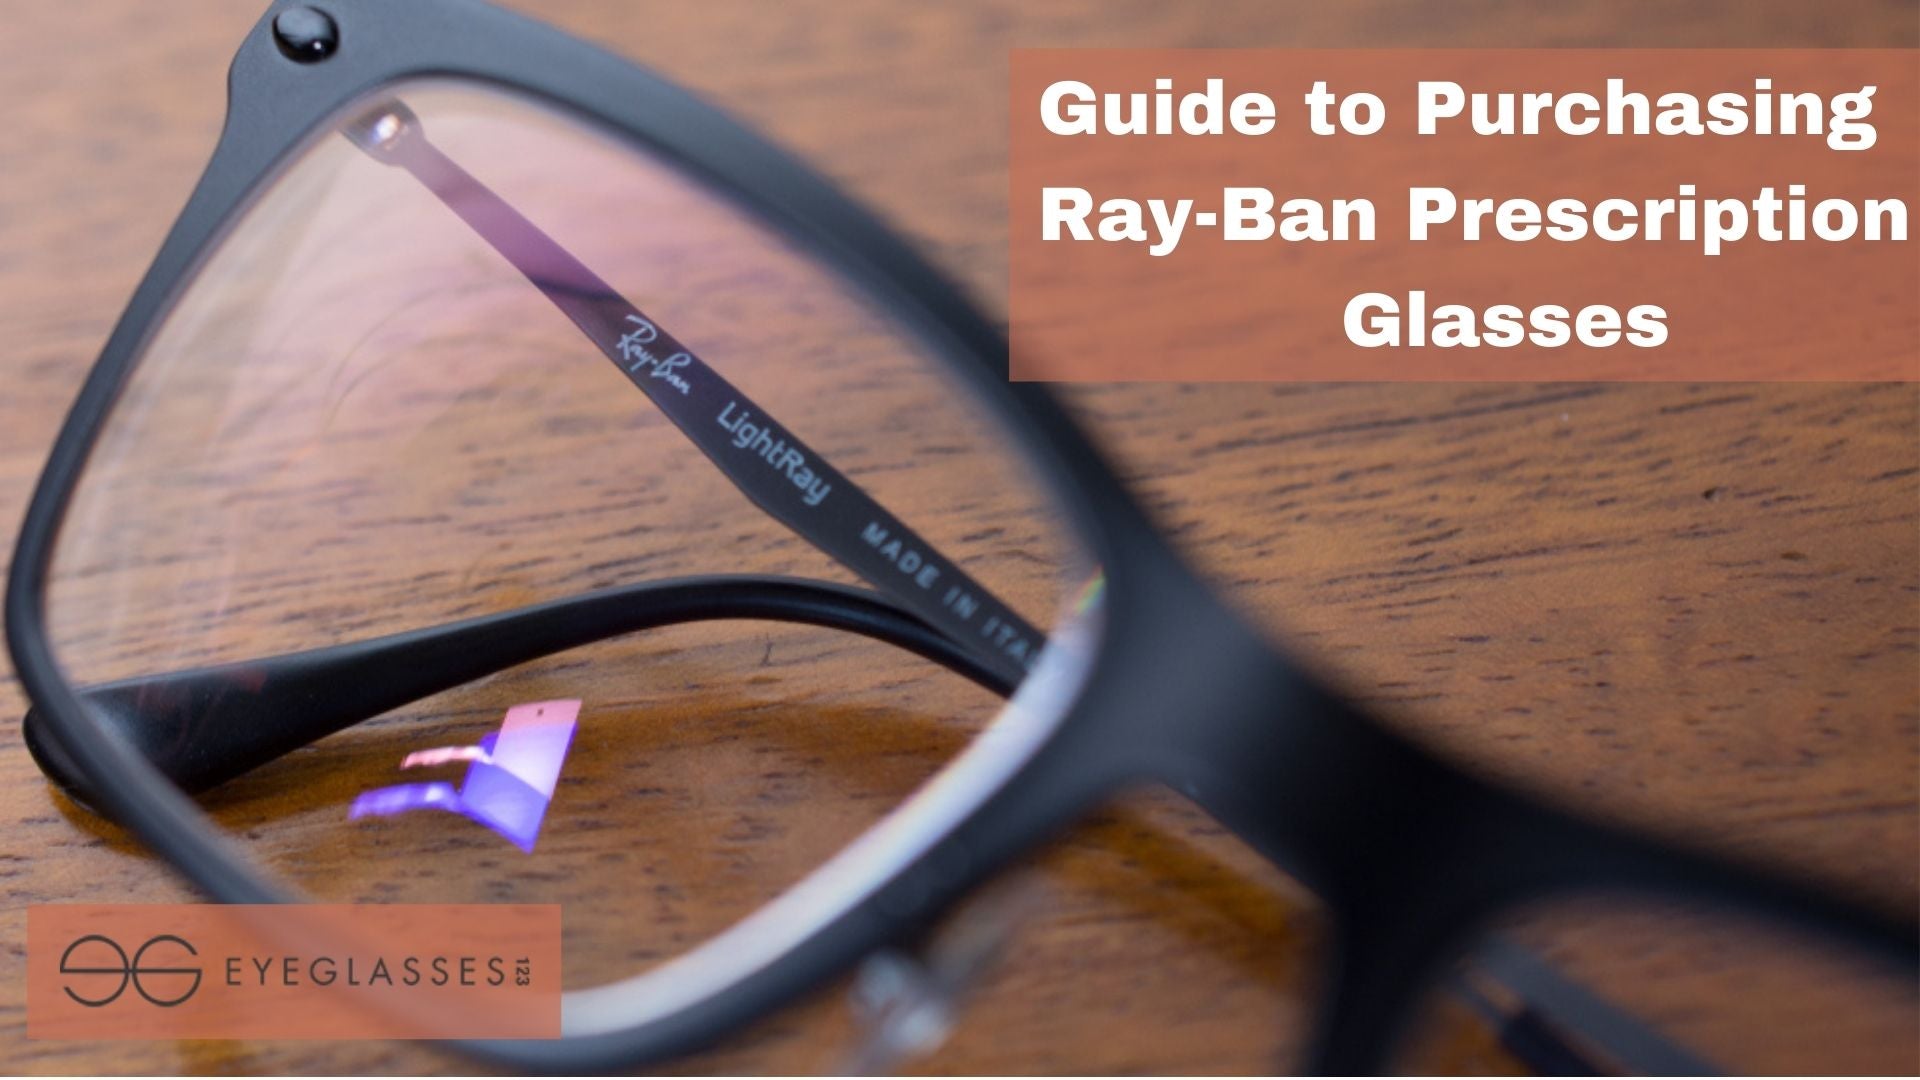 Guide to purchasing Ray-Ban prescription glasses